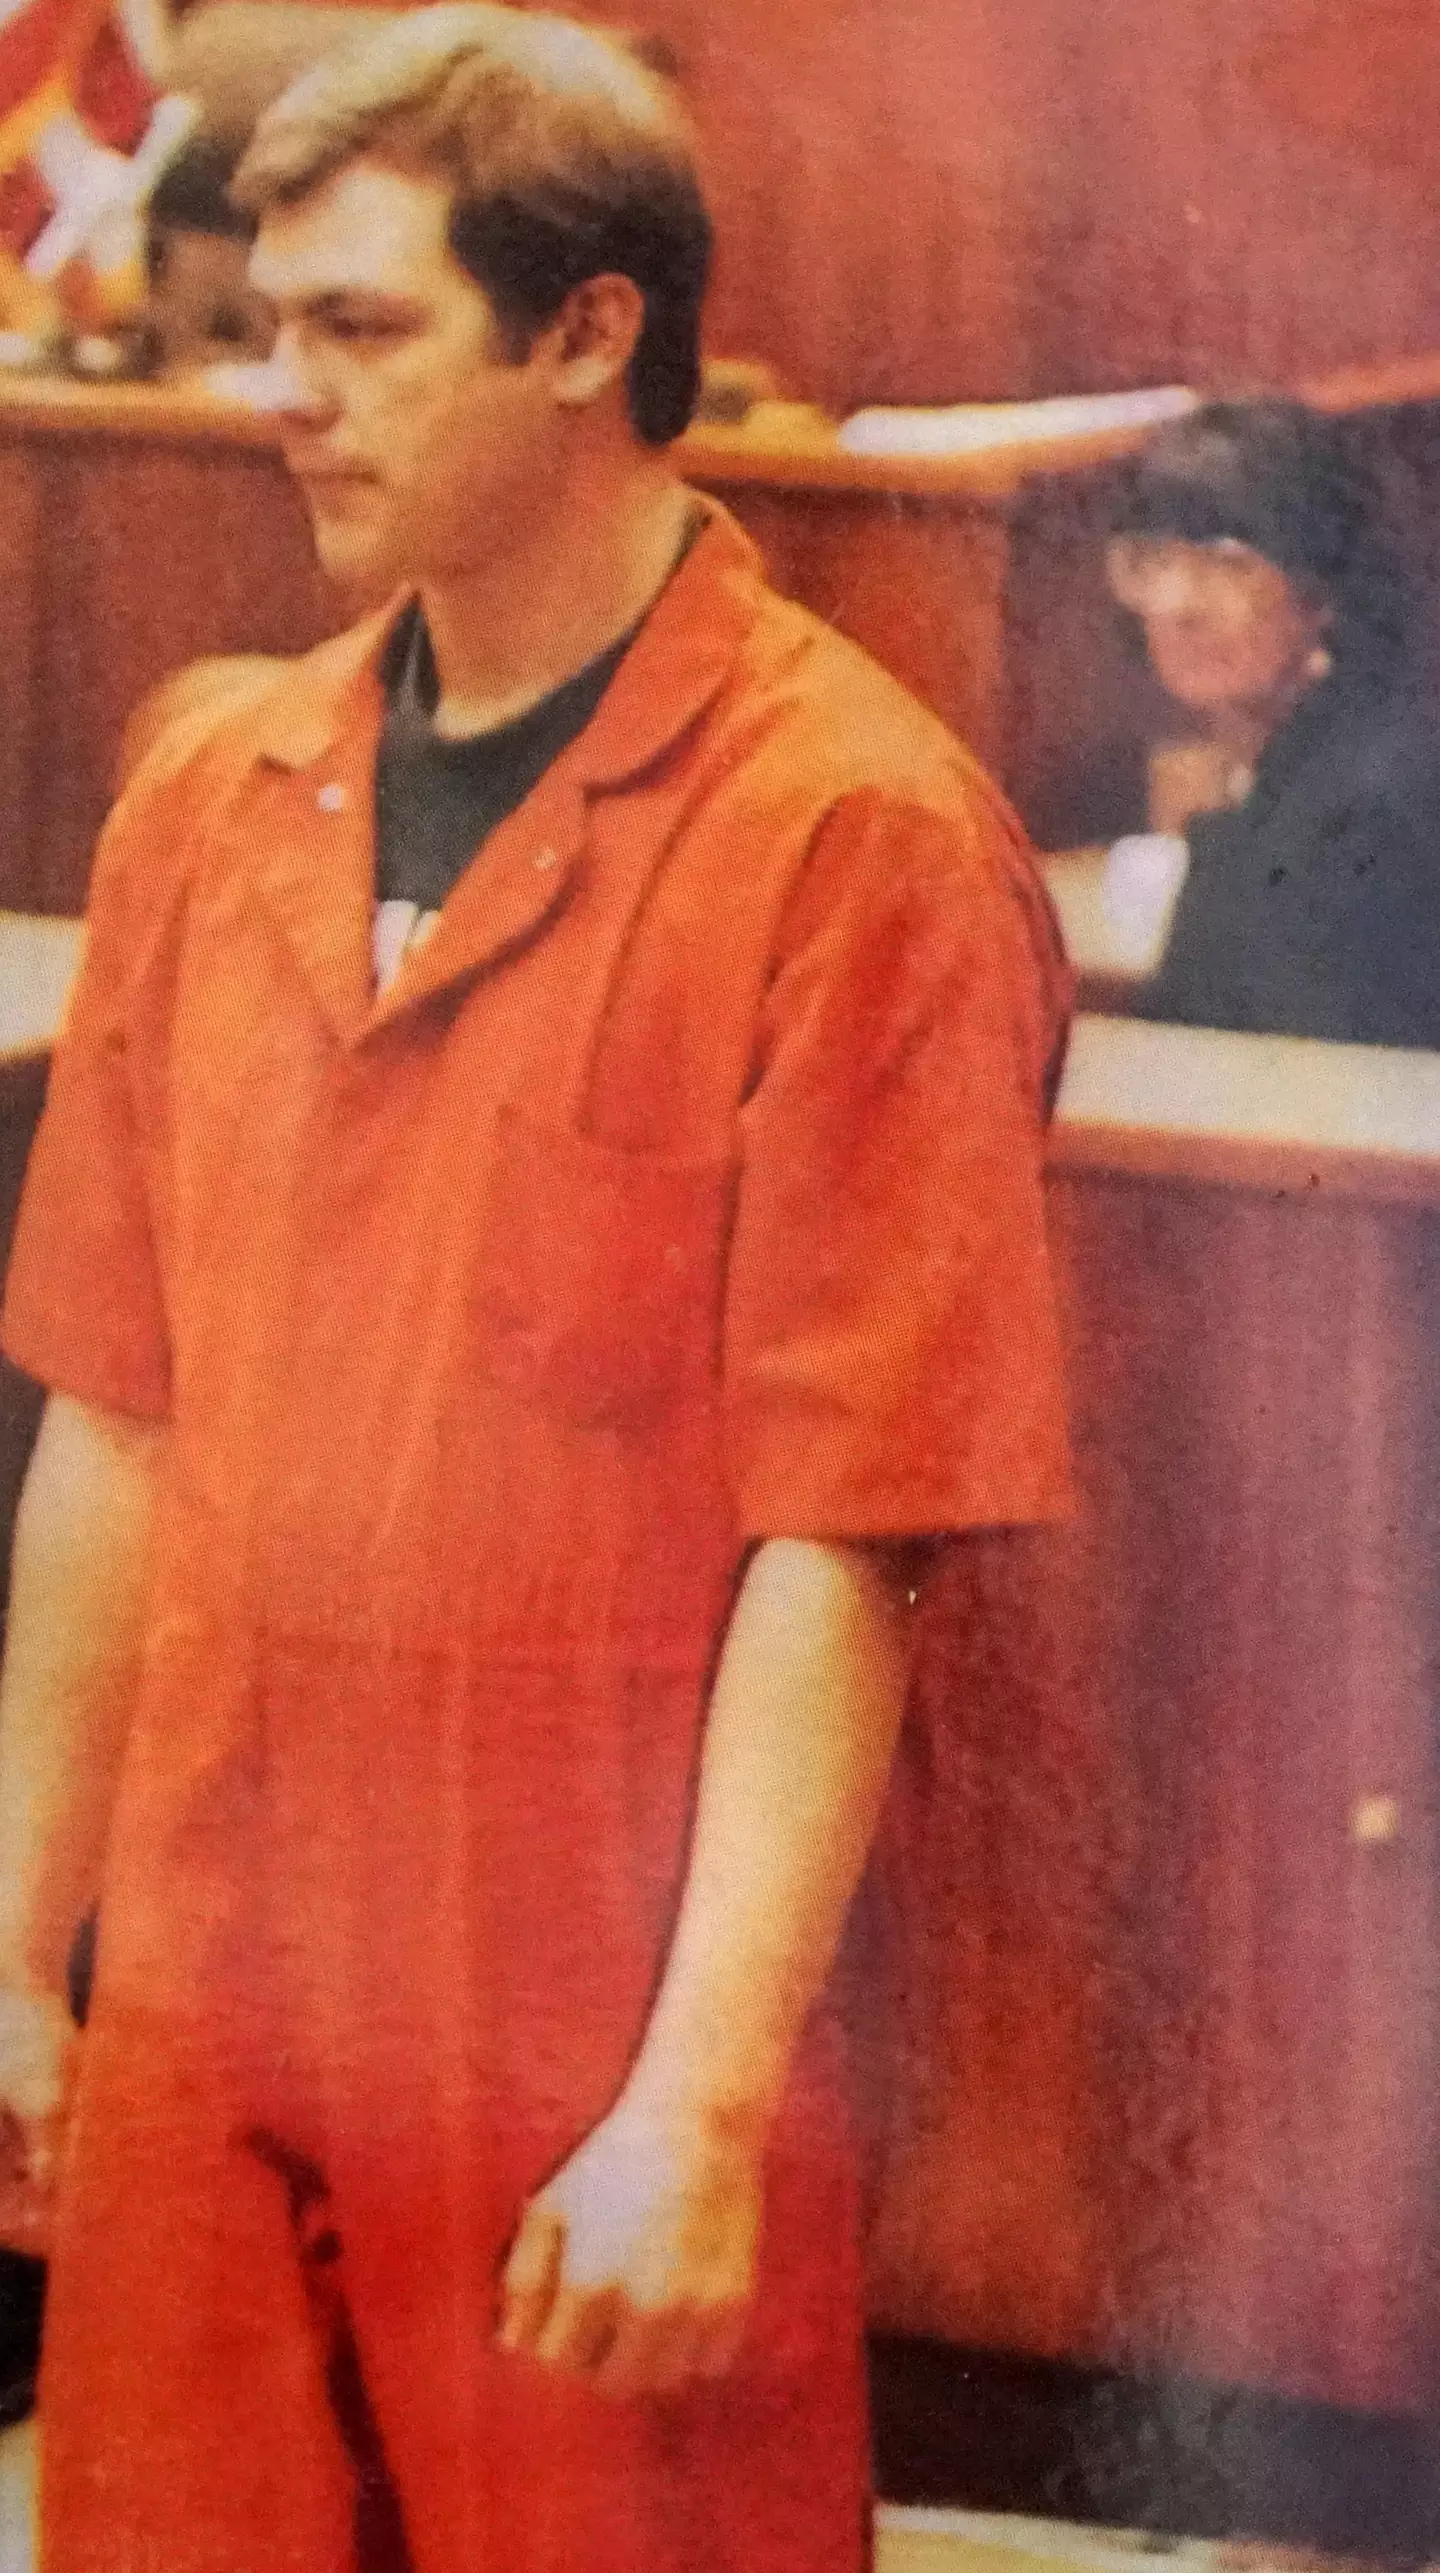 Jeffrey Dahmer during his trial.